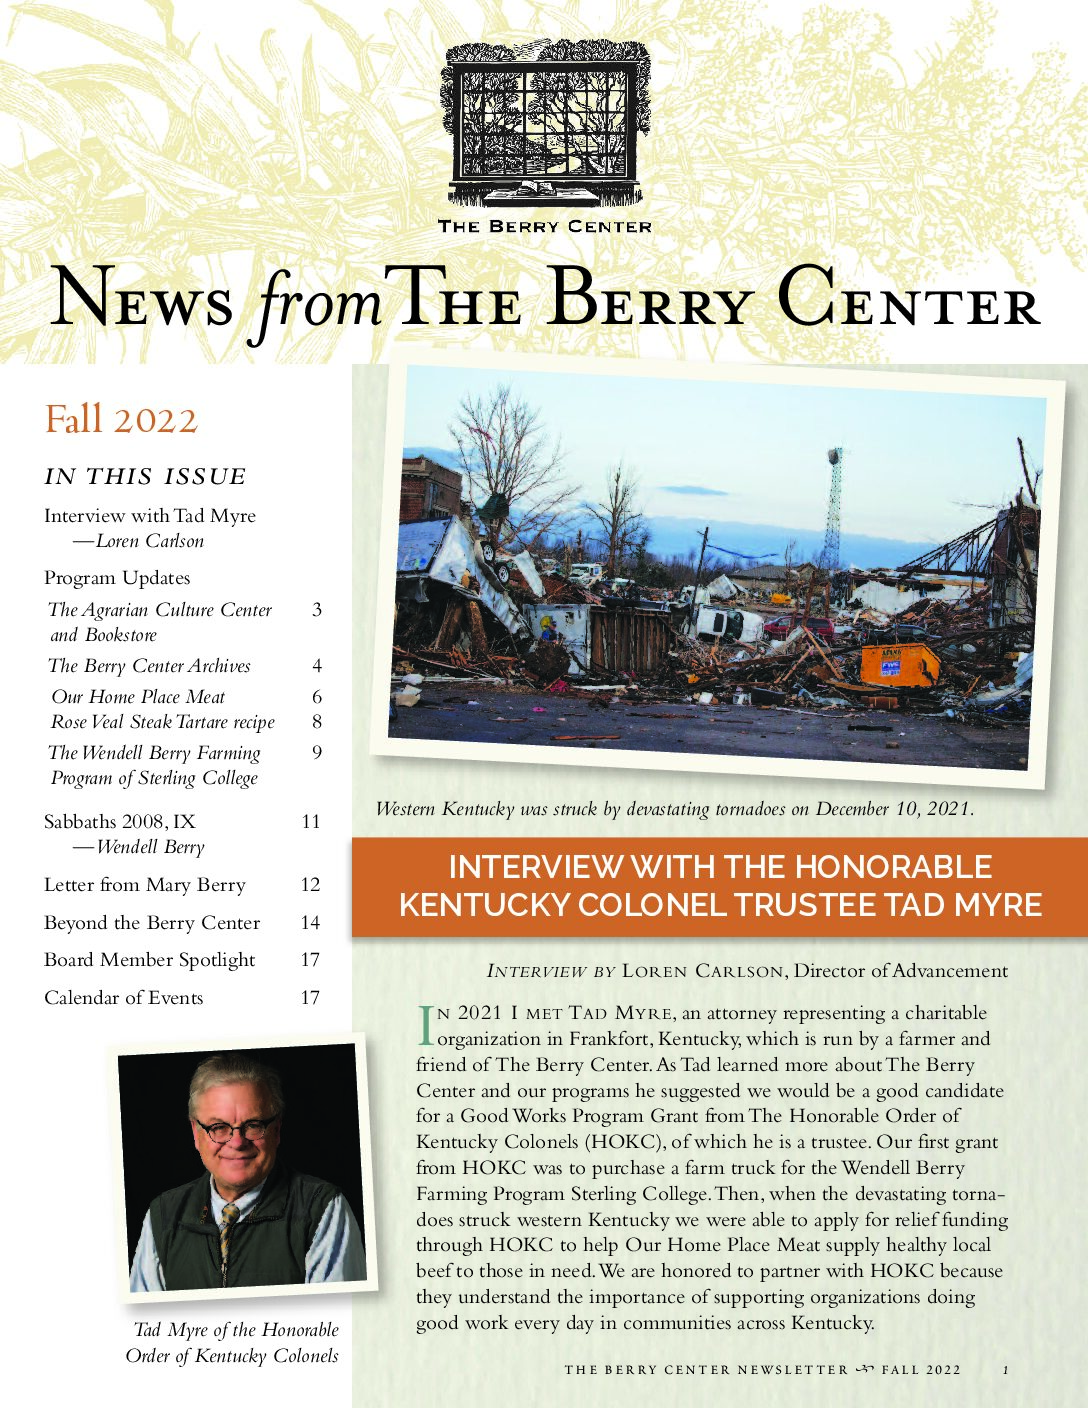 The Berry Center Newsletter – Fall 2022